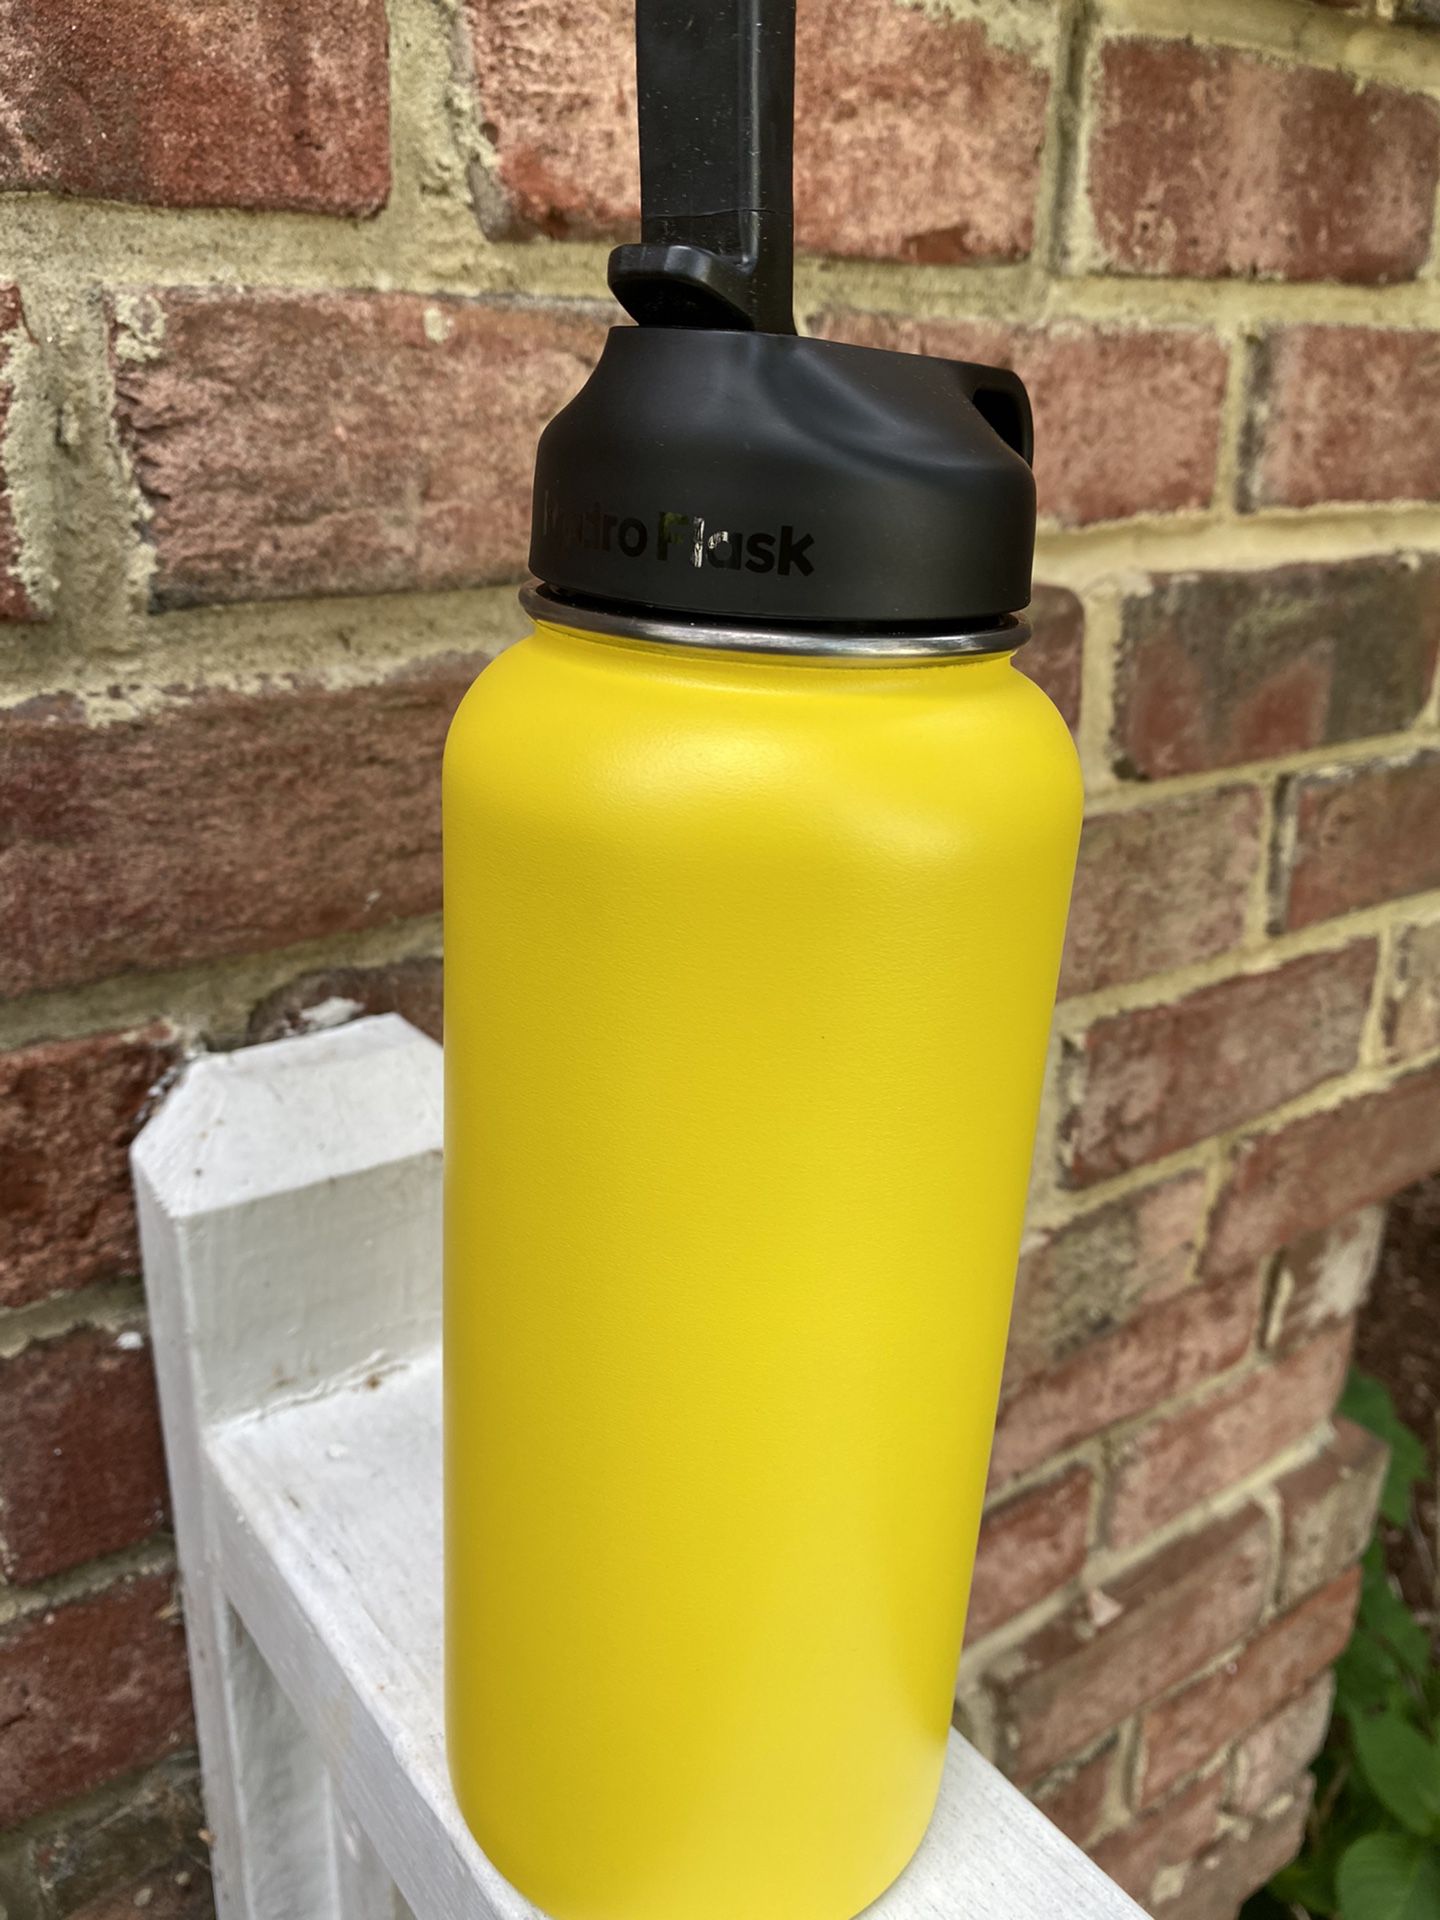 Pogo 32oz Water Bottle for Sale in Blacklick, OH - OfferUp